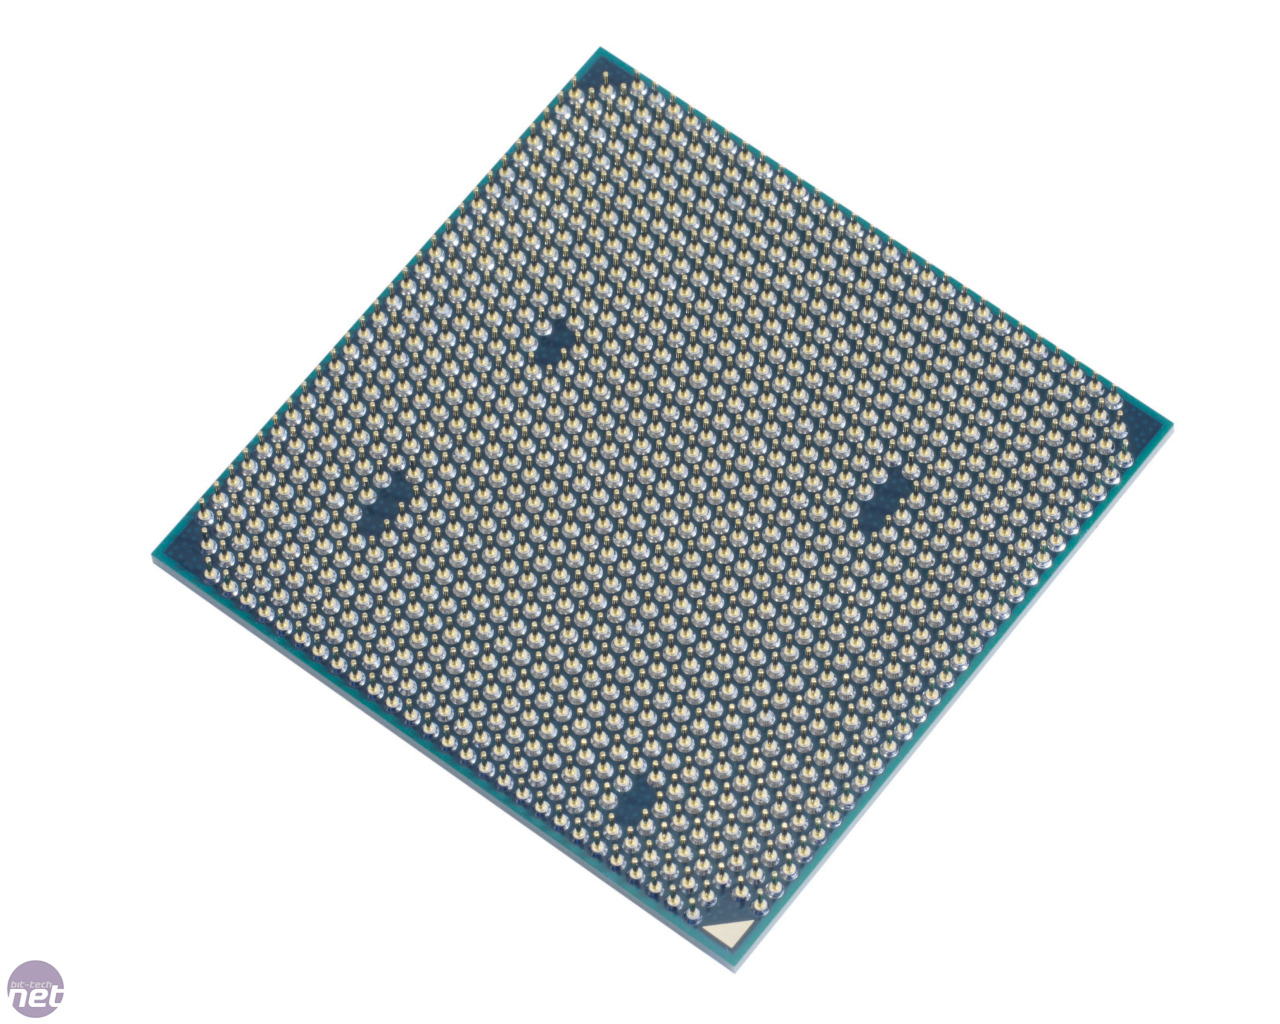 D3 процессор. AMD Athlon(TM) II x4 645 Processor. AMD Athlon x4 970. AMD Athlon(TM) II x4 645 Processor 3.10 GHZ. Атлон x3 645.